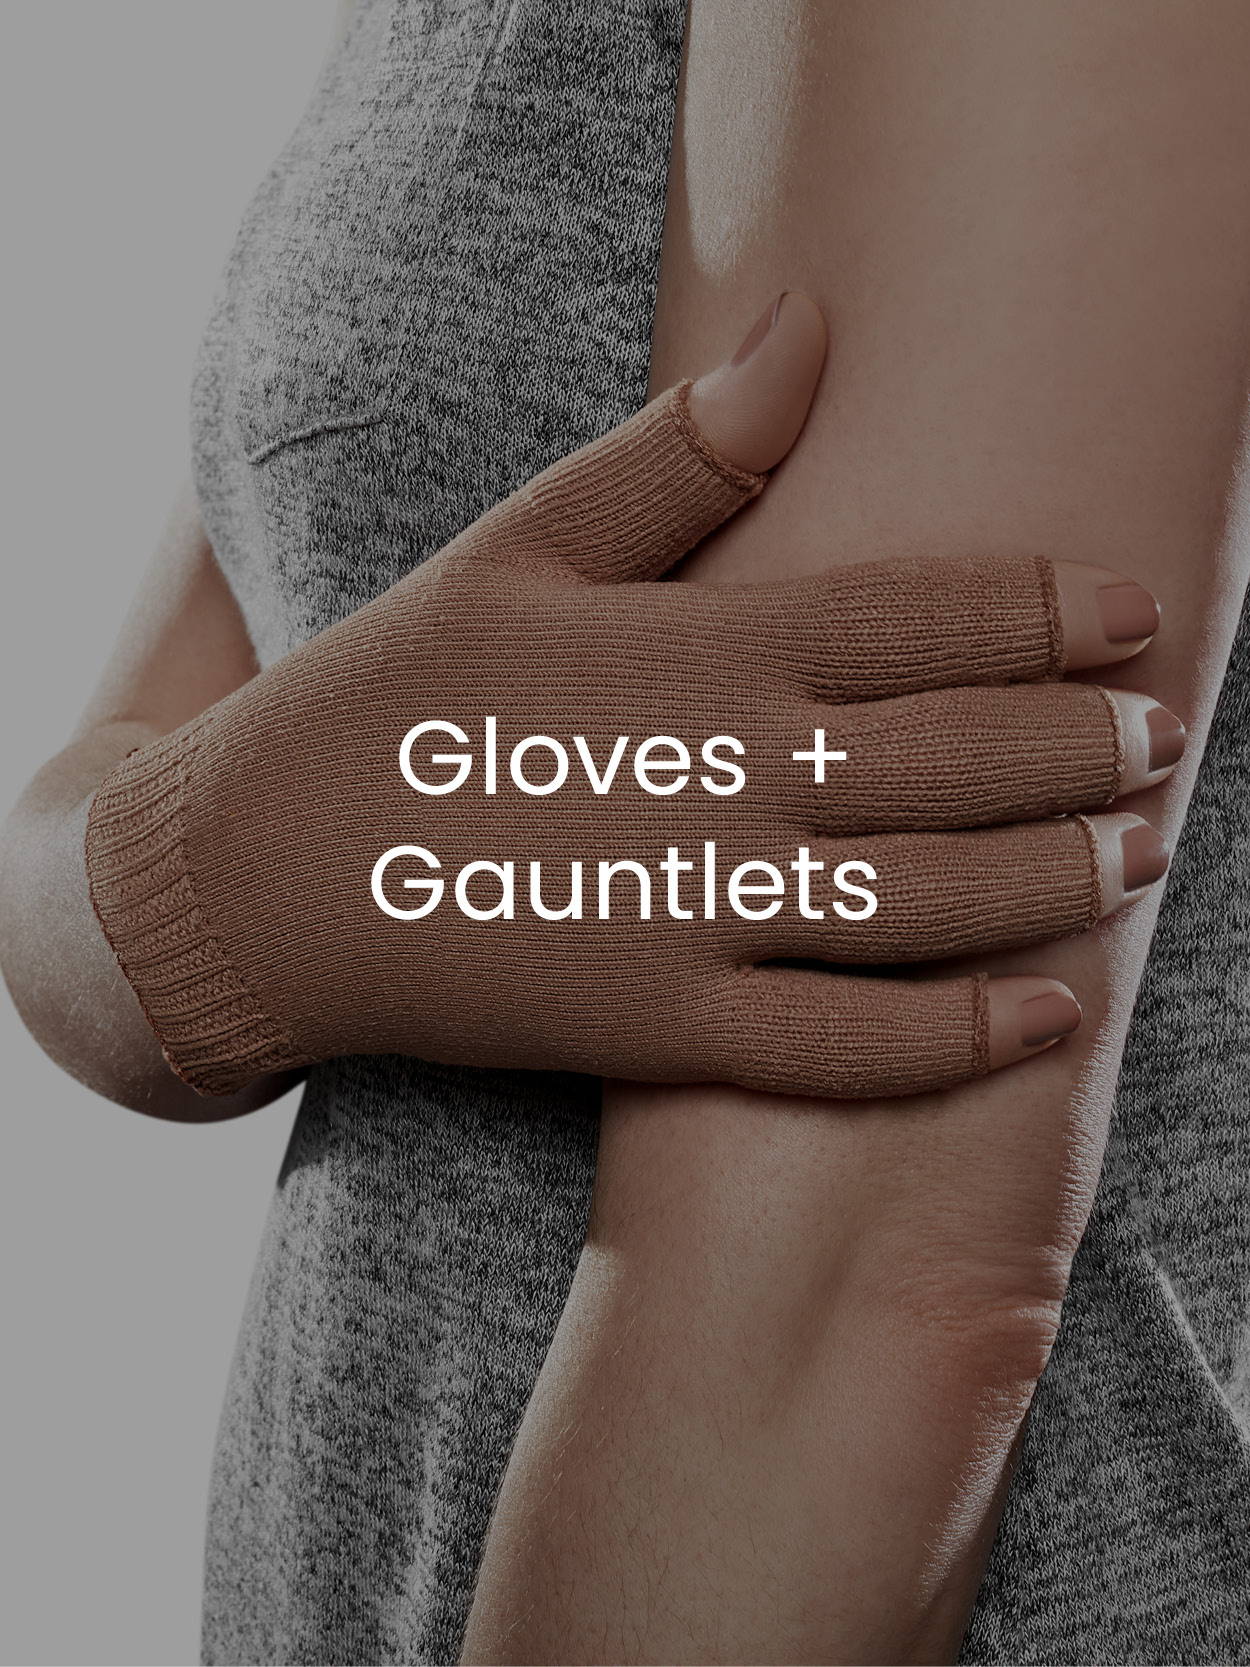 Gloves + Gauntlets